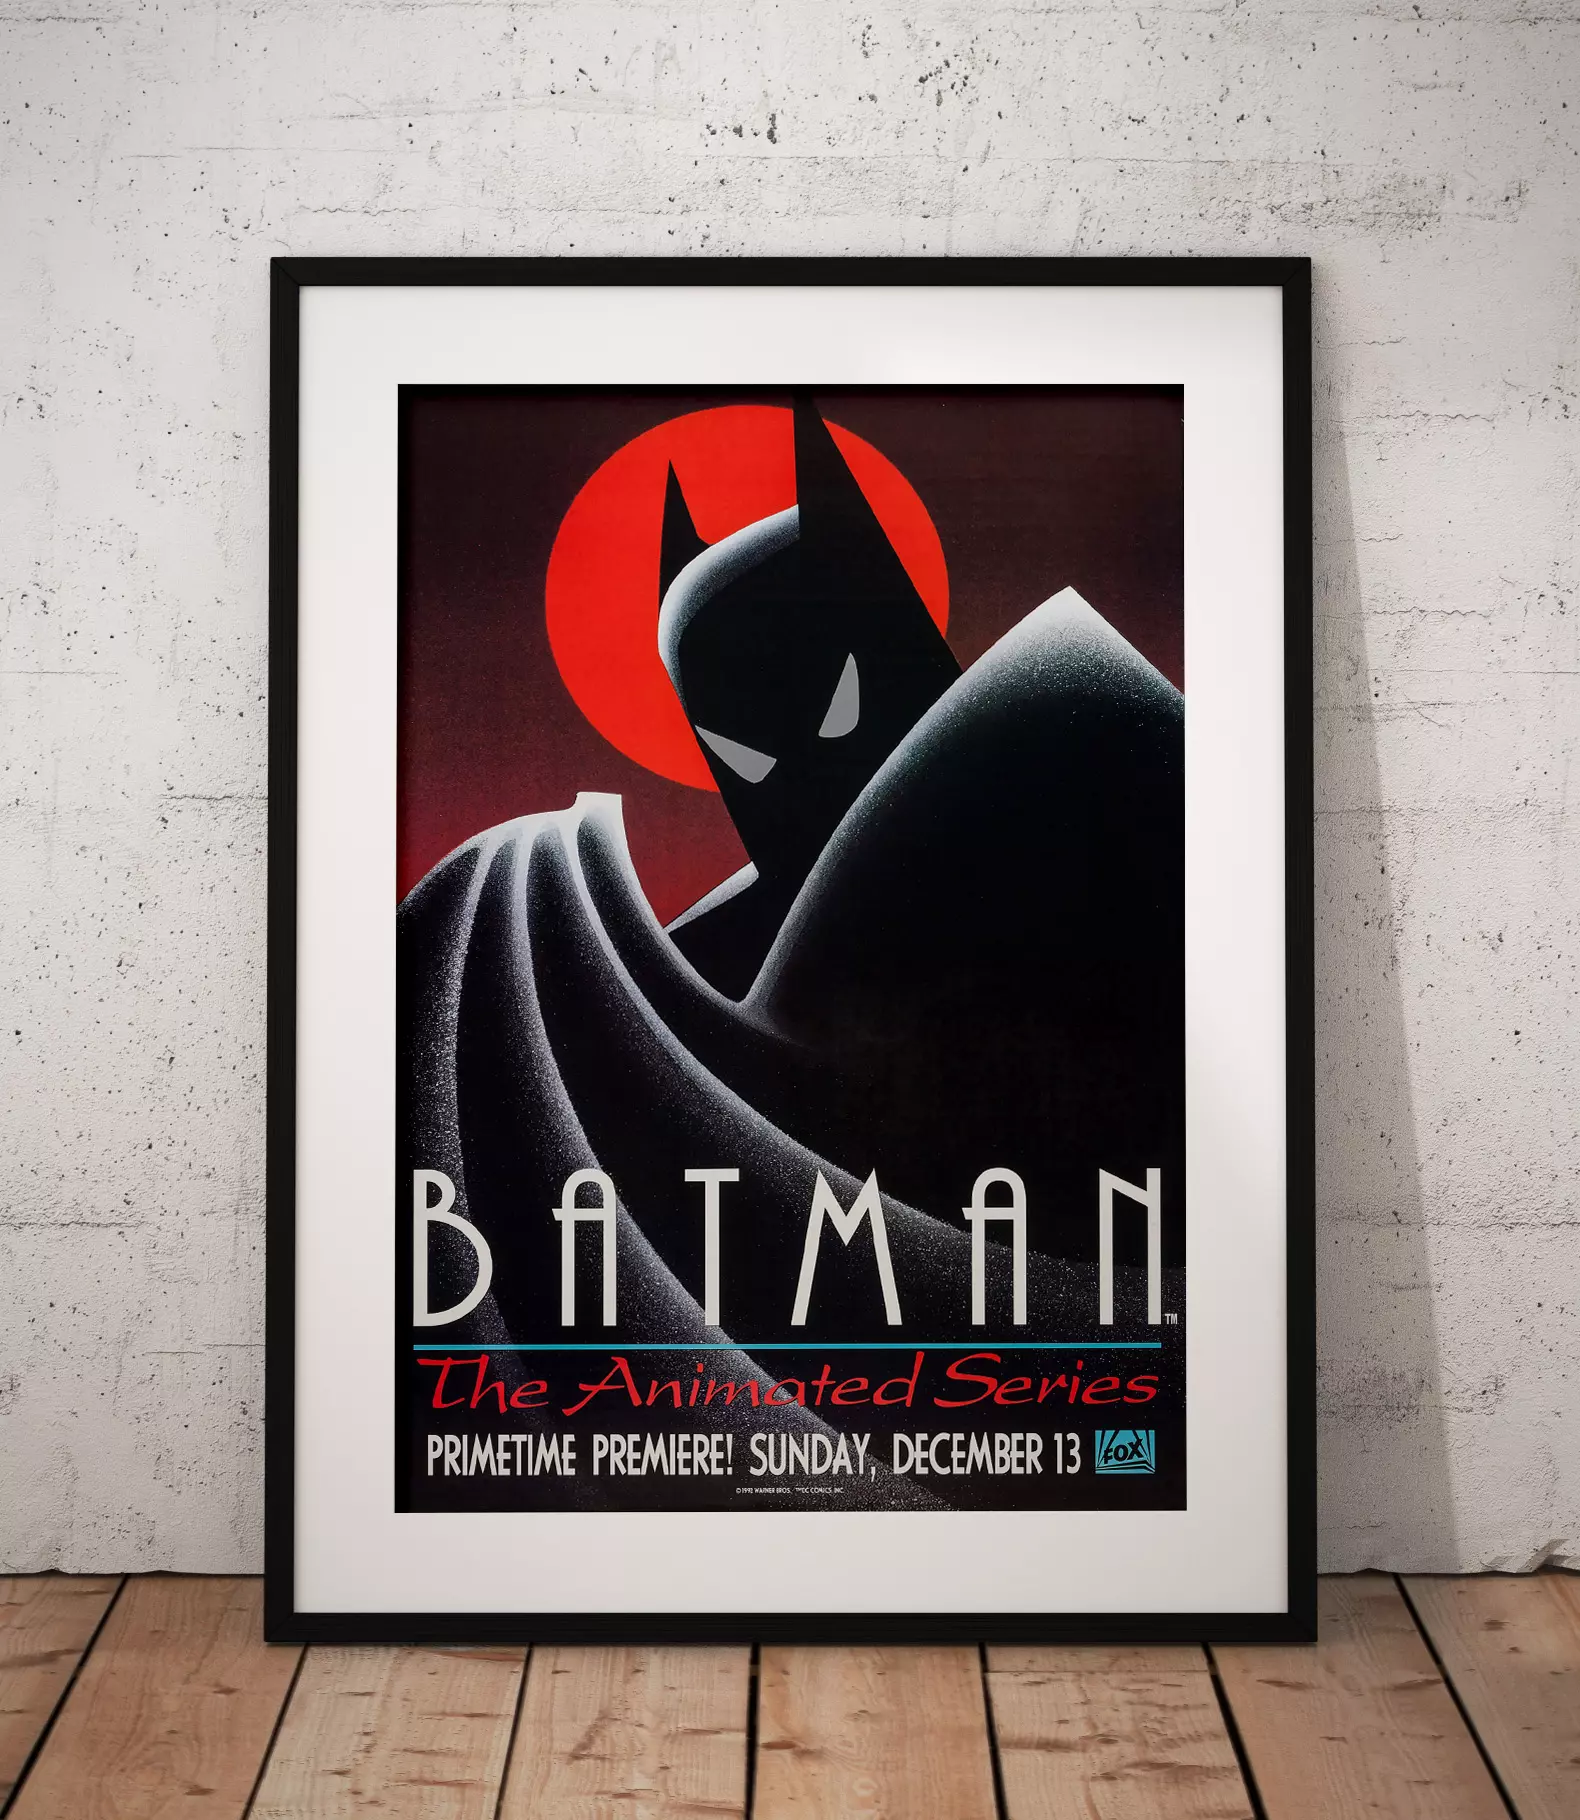 Batman The Animated Series 1992 Movie Film Poster | eBay